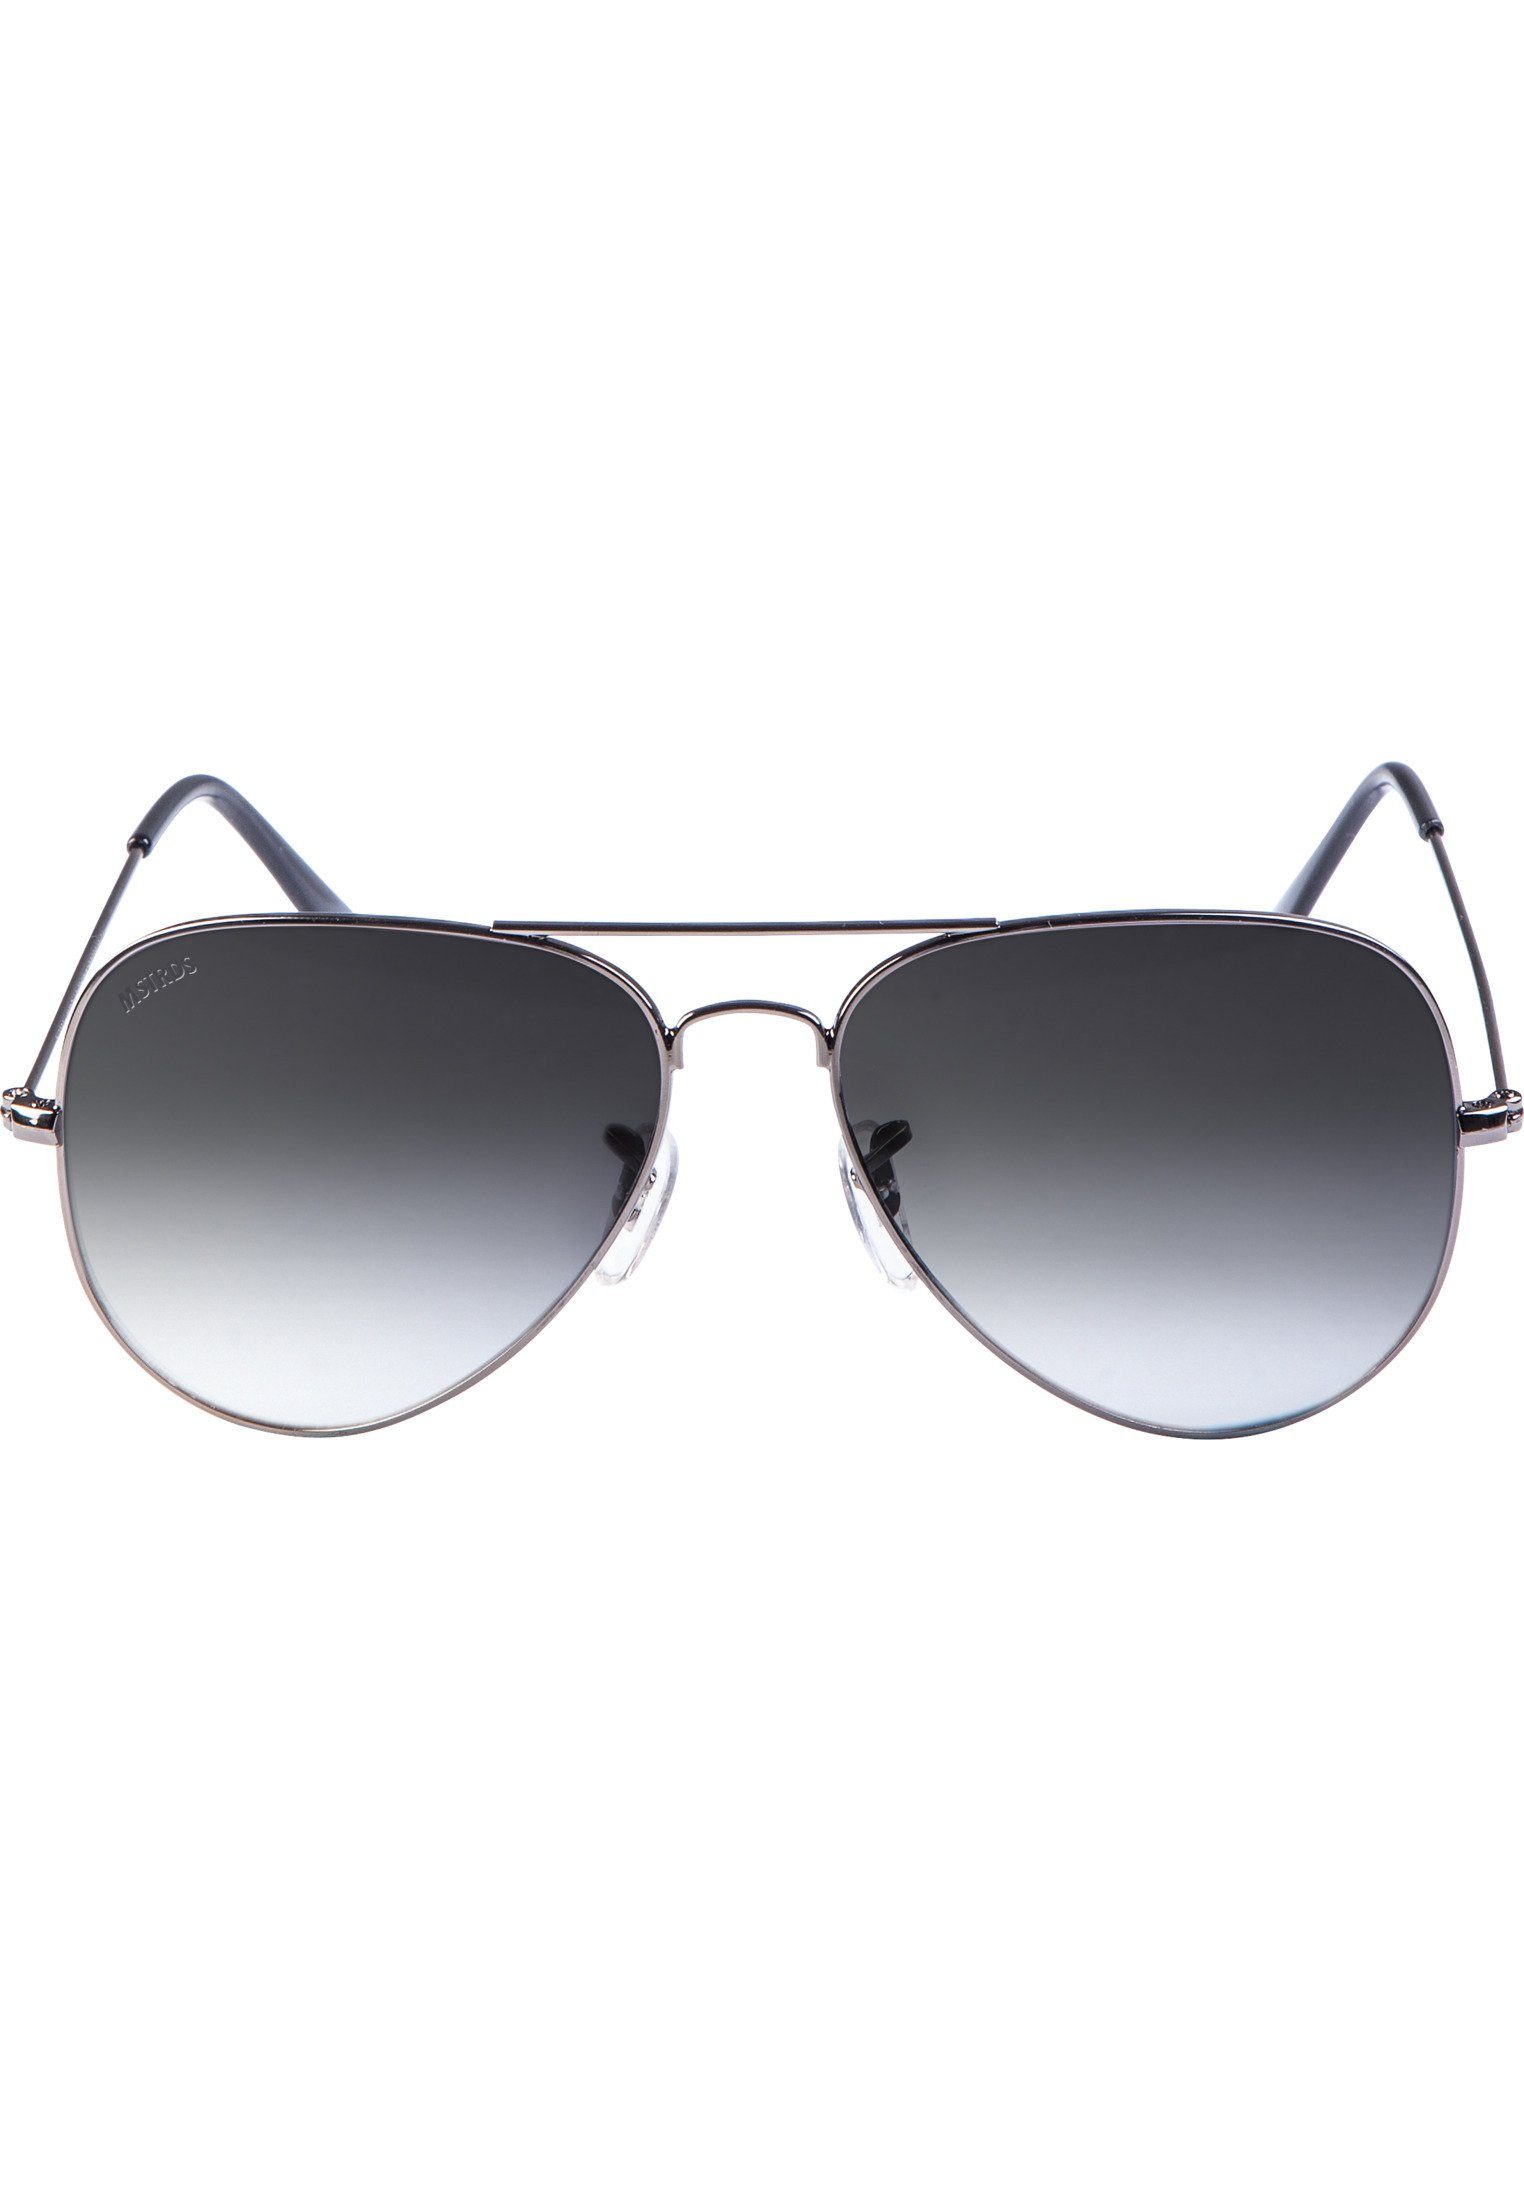 MSTRDS Sonnenbrille Accessoires Sunglasses PureAv gun/grey